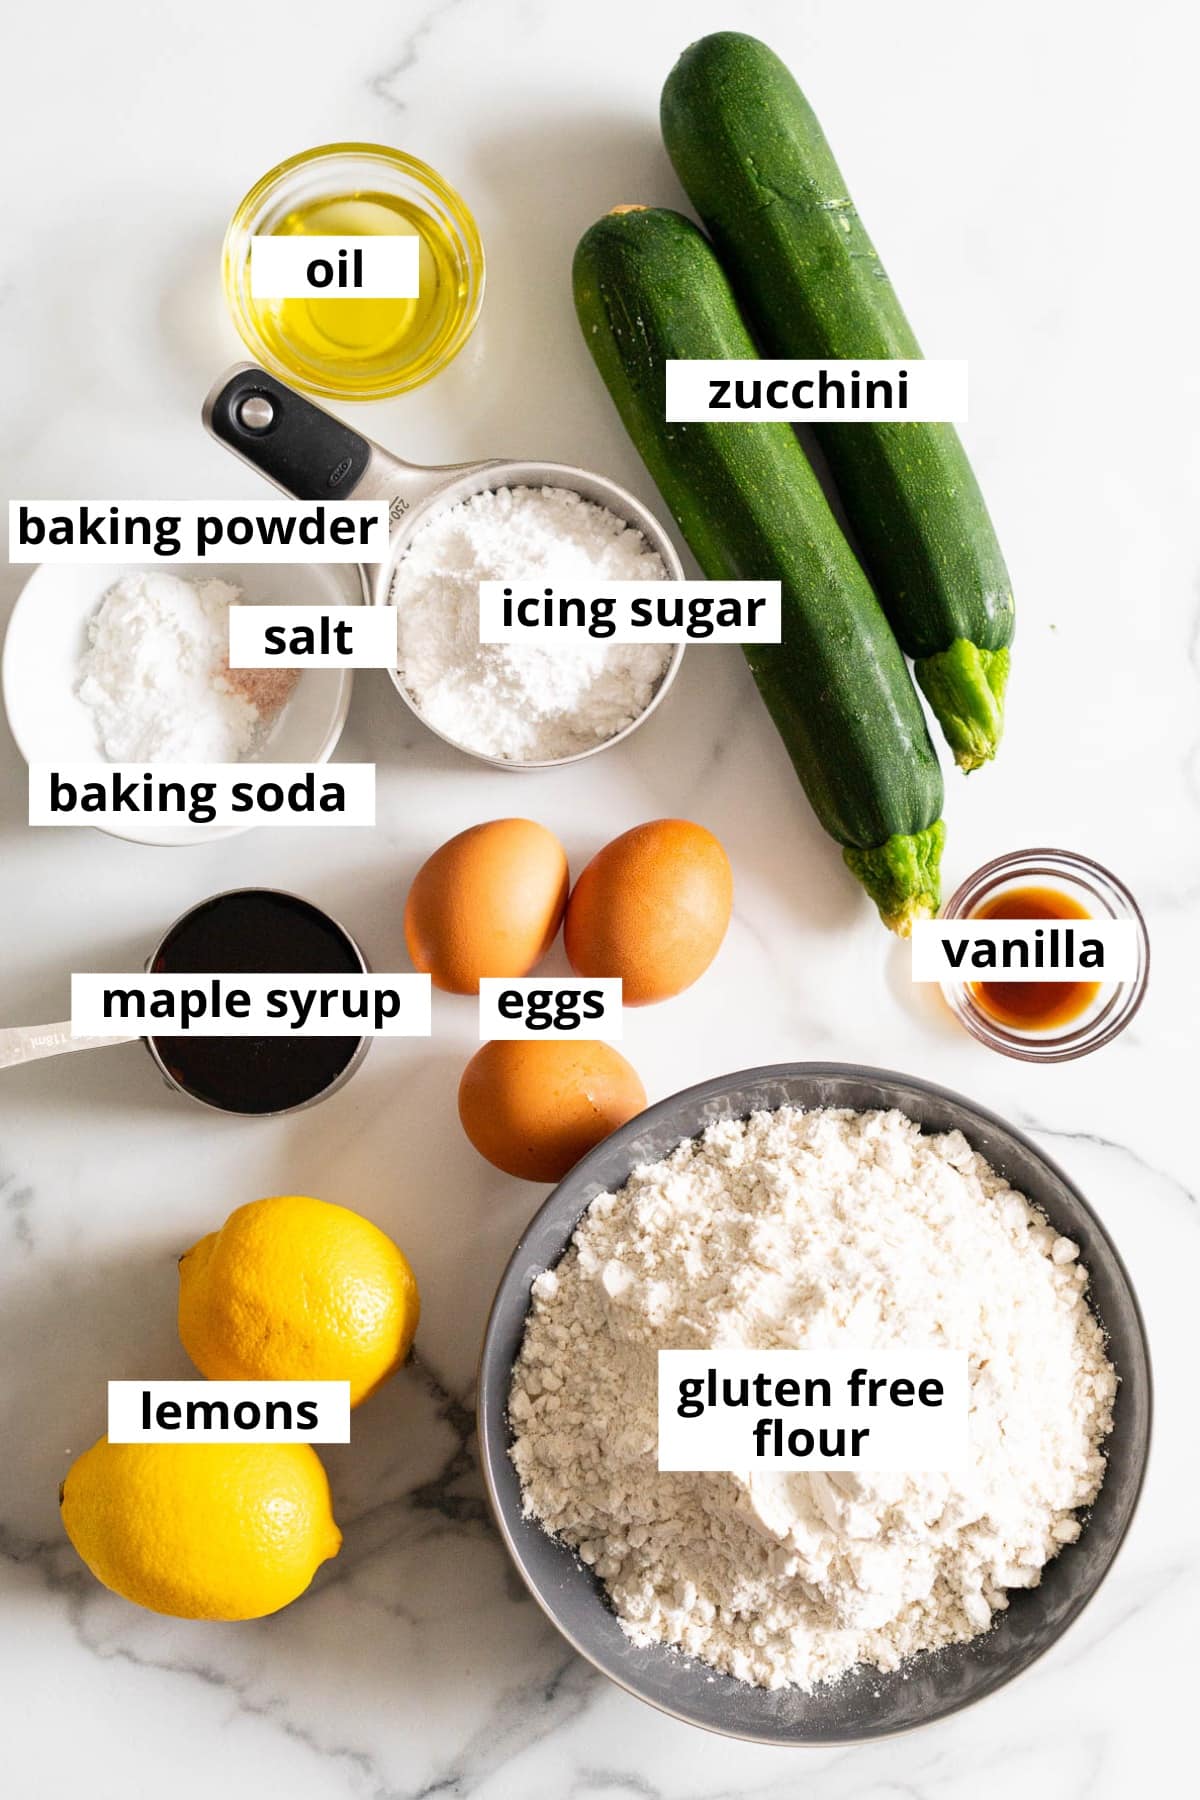 Zucchini, lemons, gluten-free flour, maple syrup, eggs, vanilla extract, oil, icing sugar, baking powder, baking soda, salt.